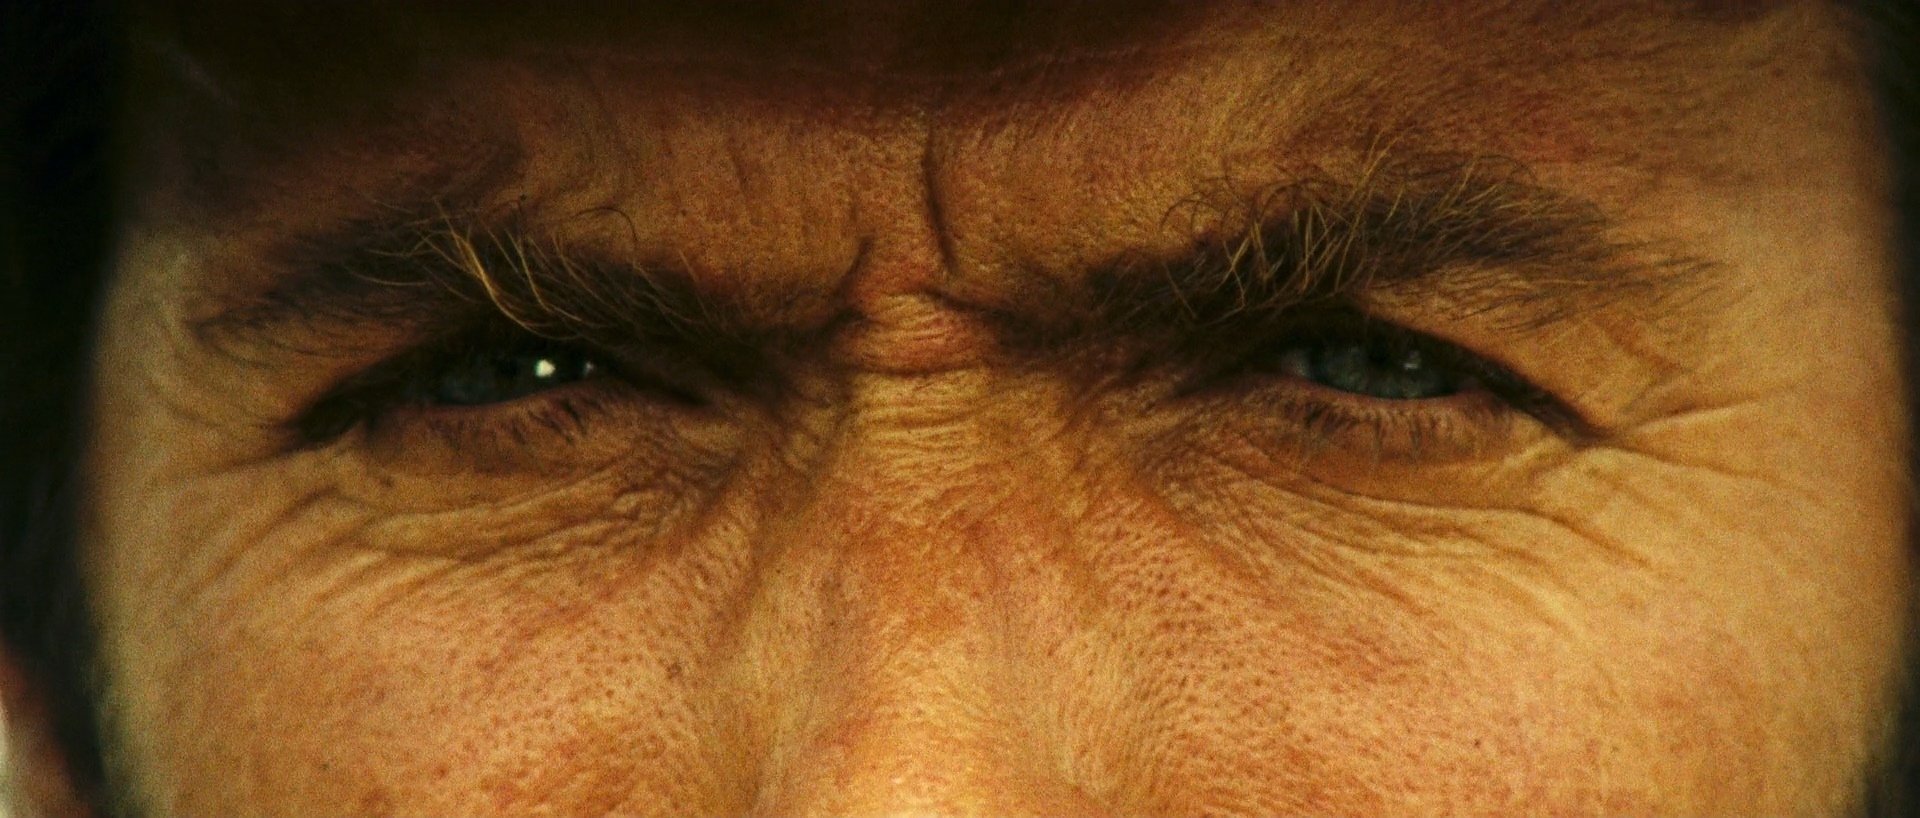 Глаза ковбоя. Клинт Иствуд прищур. Клинт Иствуд взгляд. Клинт Иствуд ковбой глаза. Клинт Иствуд щурится.